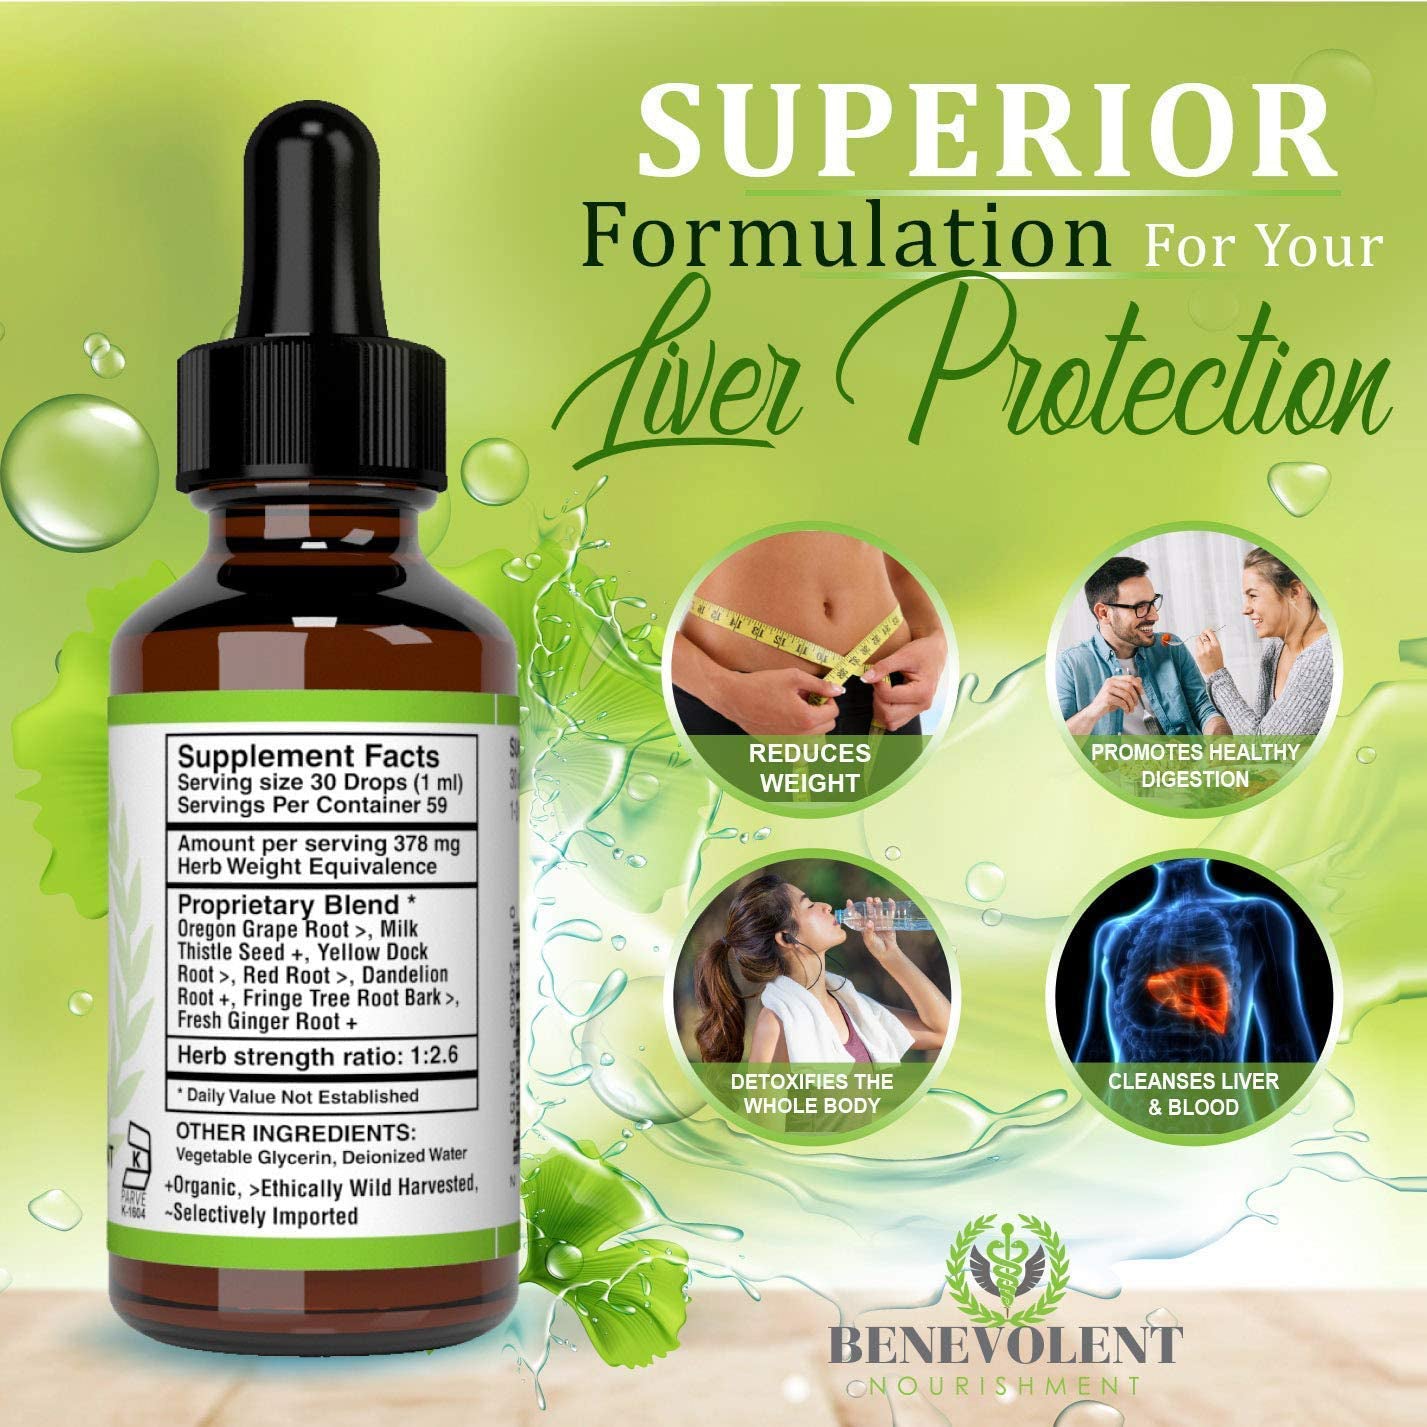 Superior formula for liver protection